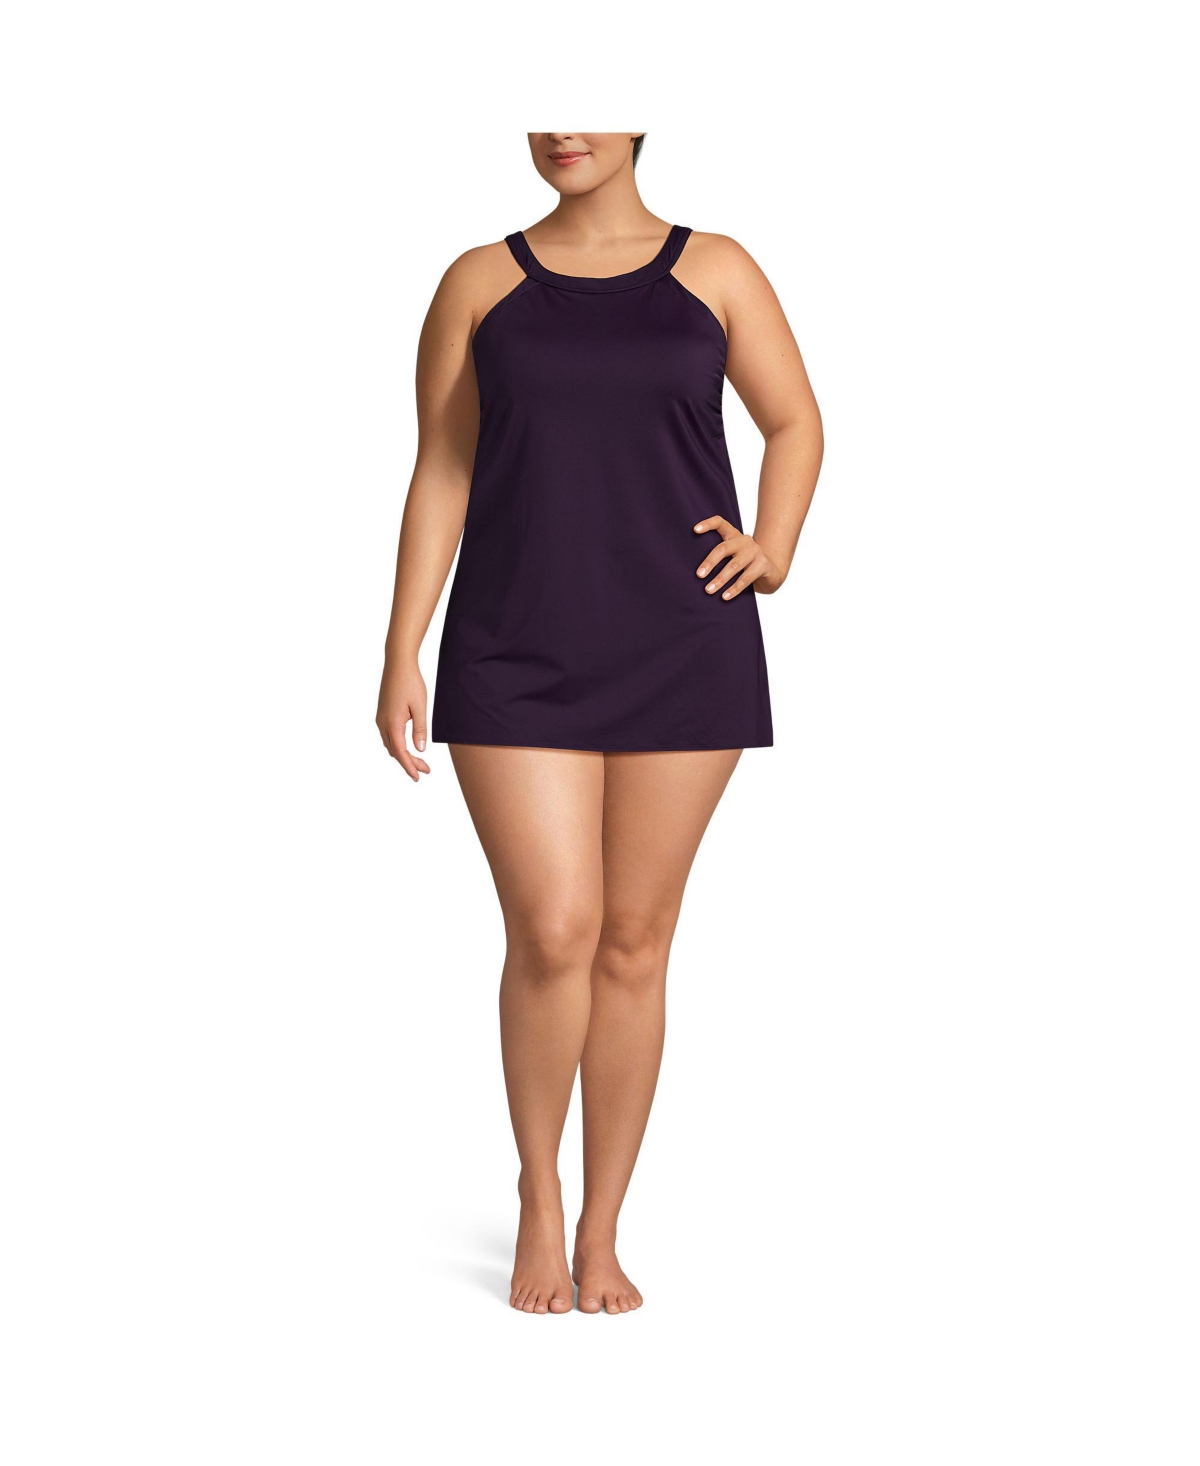 Plus Size Chlorine Resistant High Neck Swim Dress One Piece Swimsuit - Blackberry